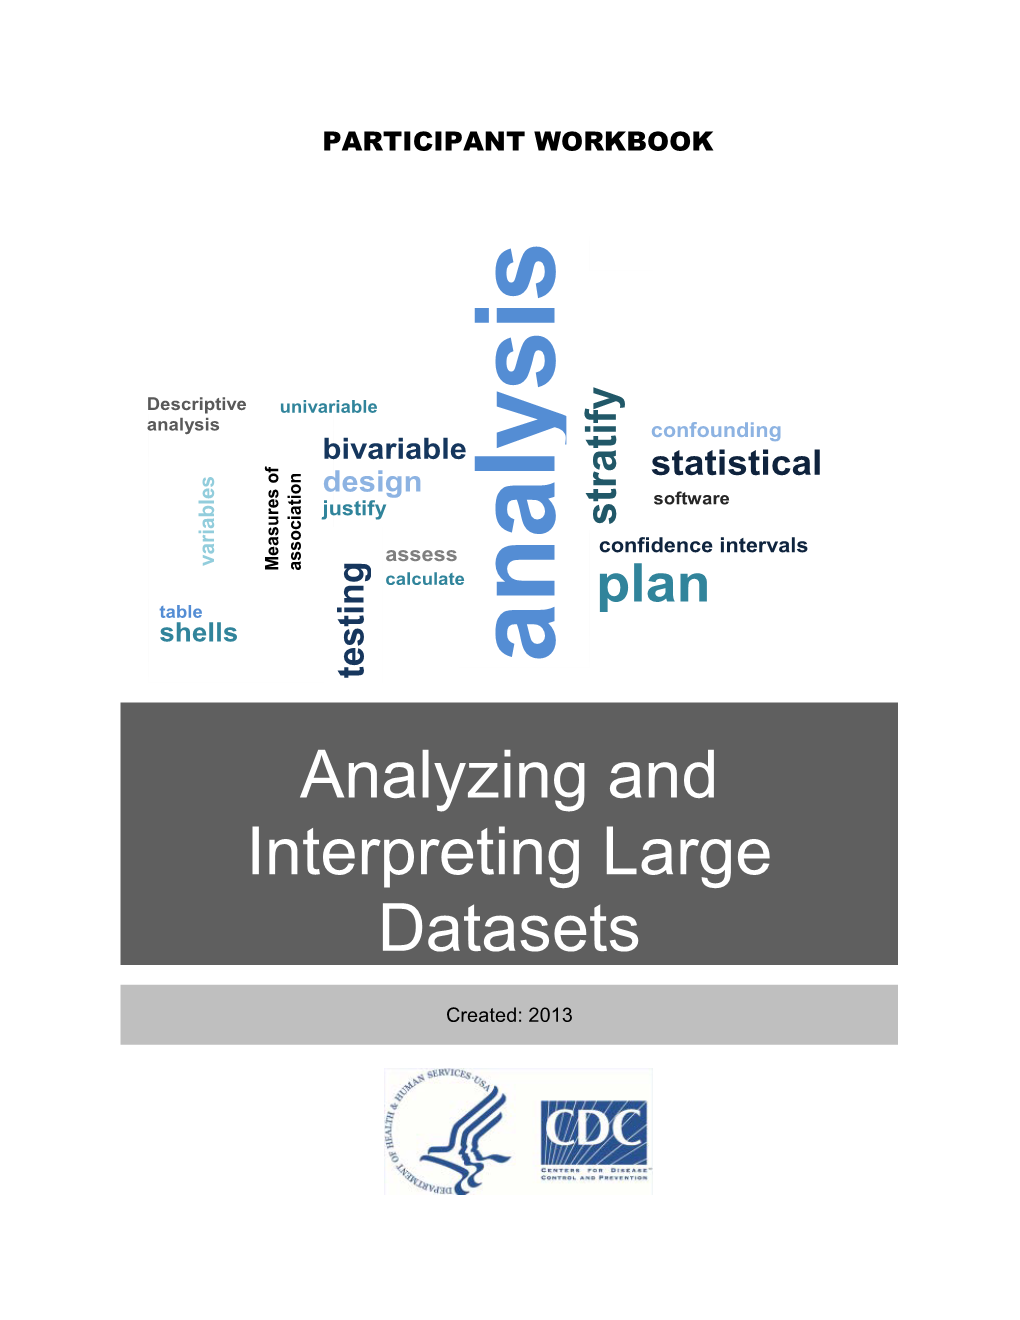 Analyzing and Interpreting Large Datasets